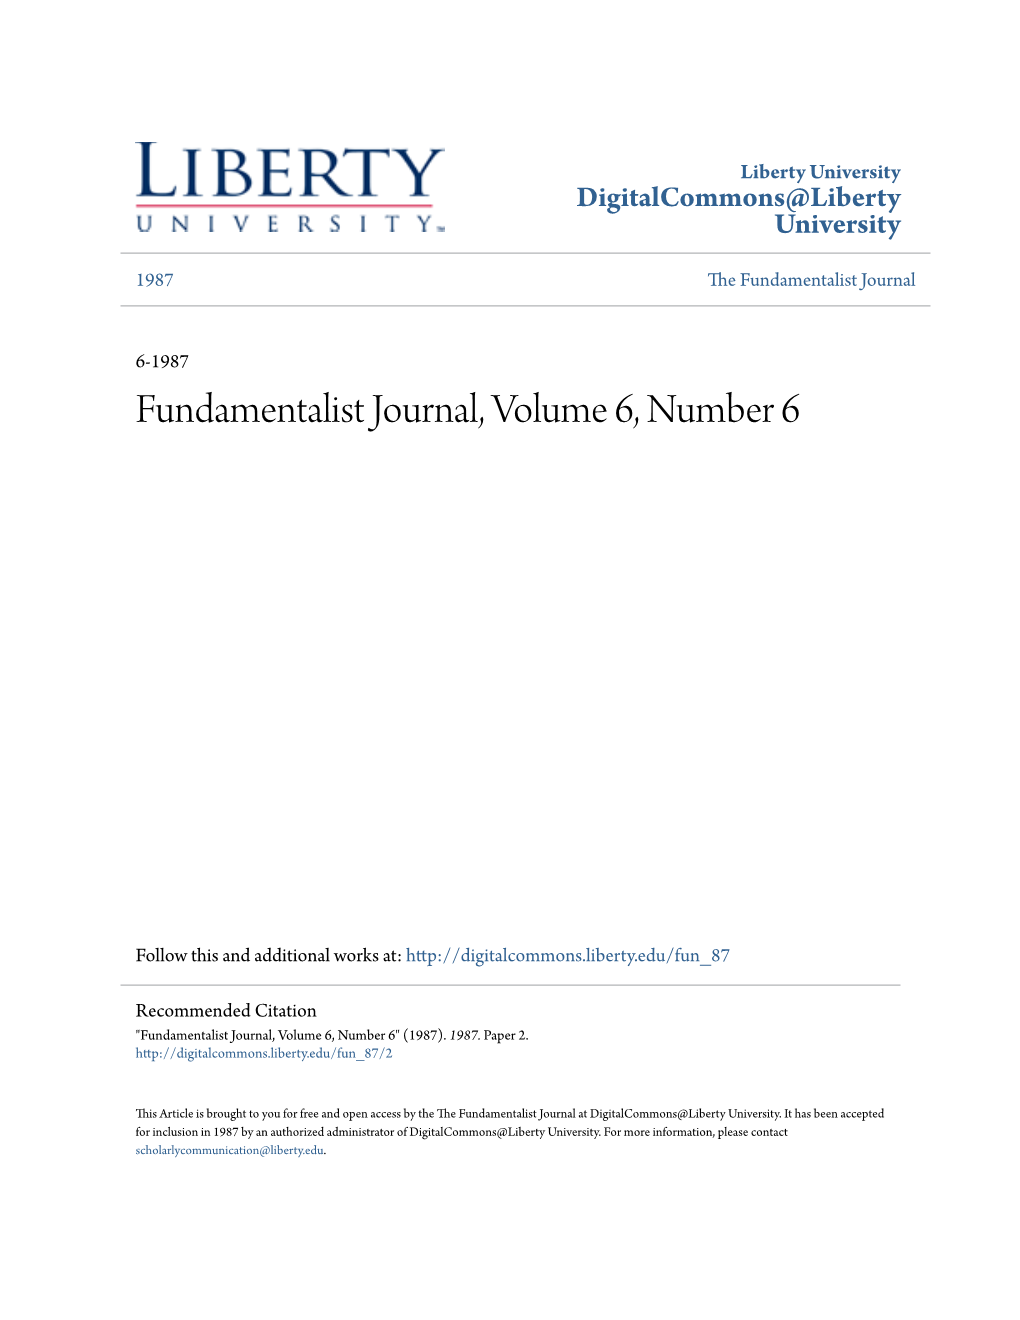 Fundamentalist Journal, Volume 6, Number 6